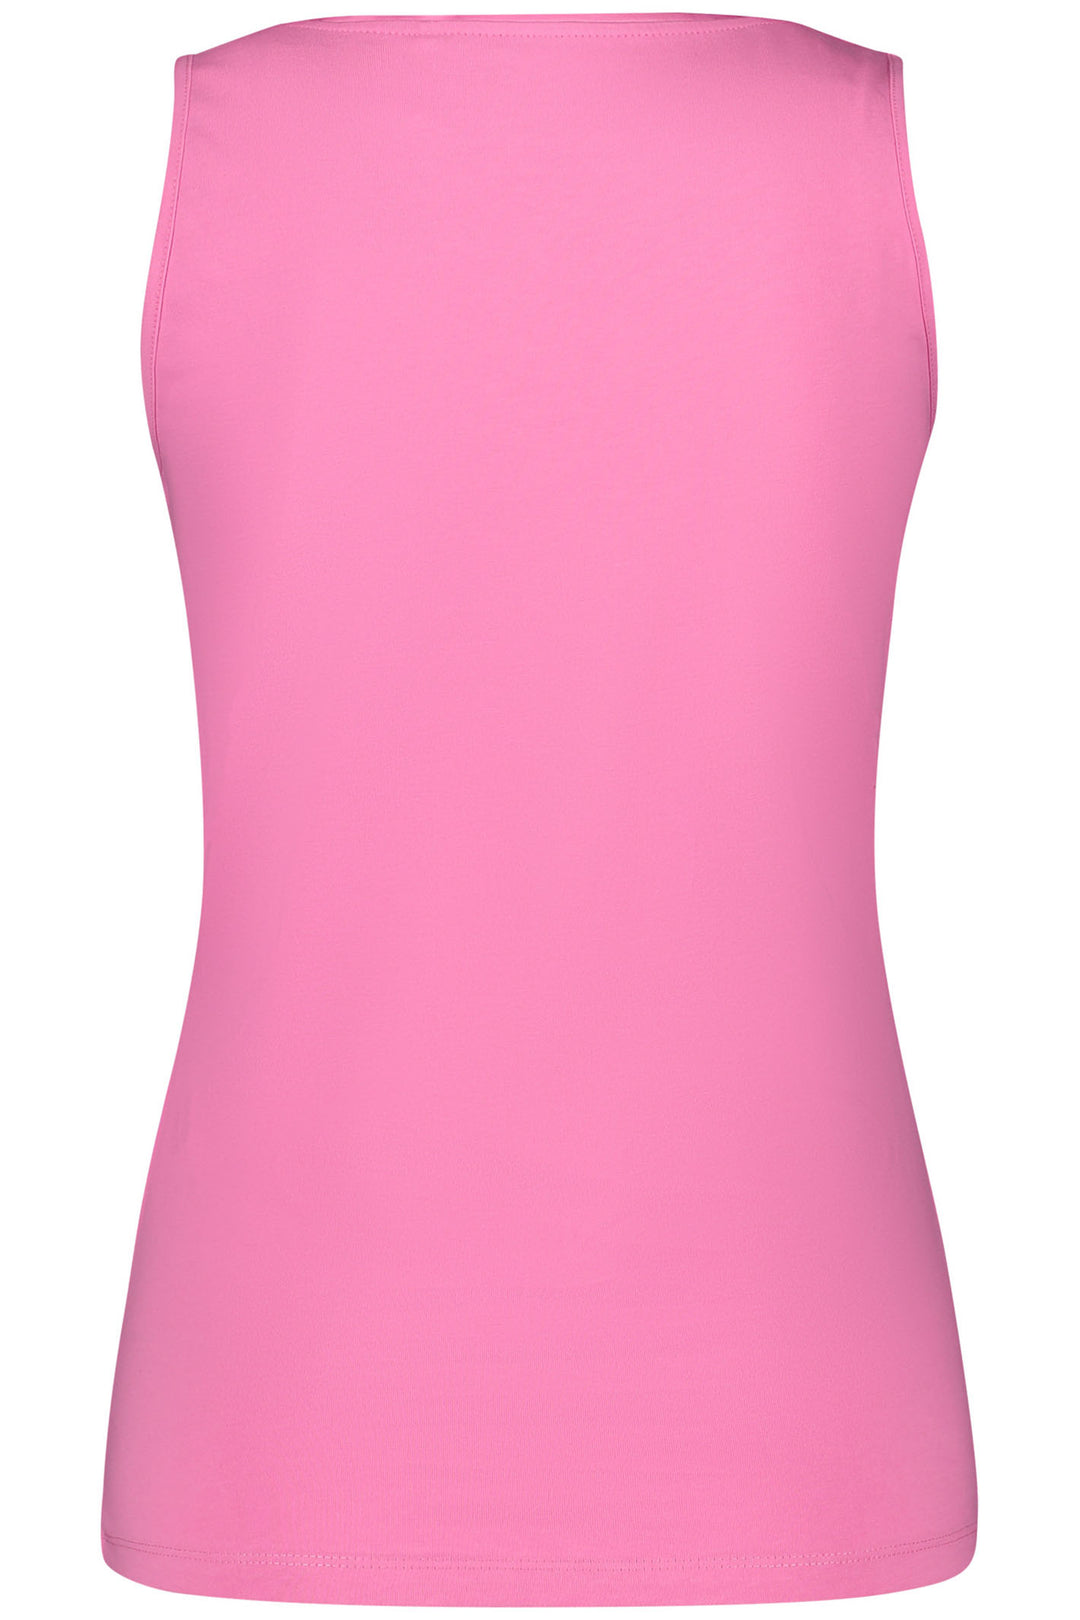 Gerry Weber 977049 Solar Pink Vest Top - Experience Boutique